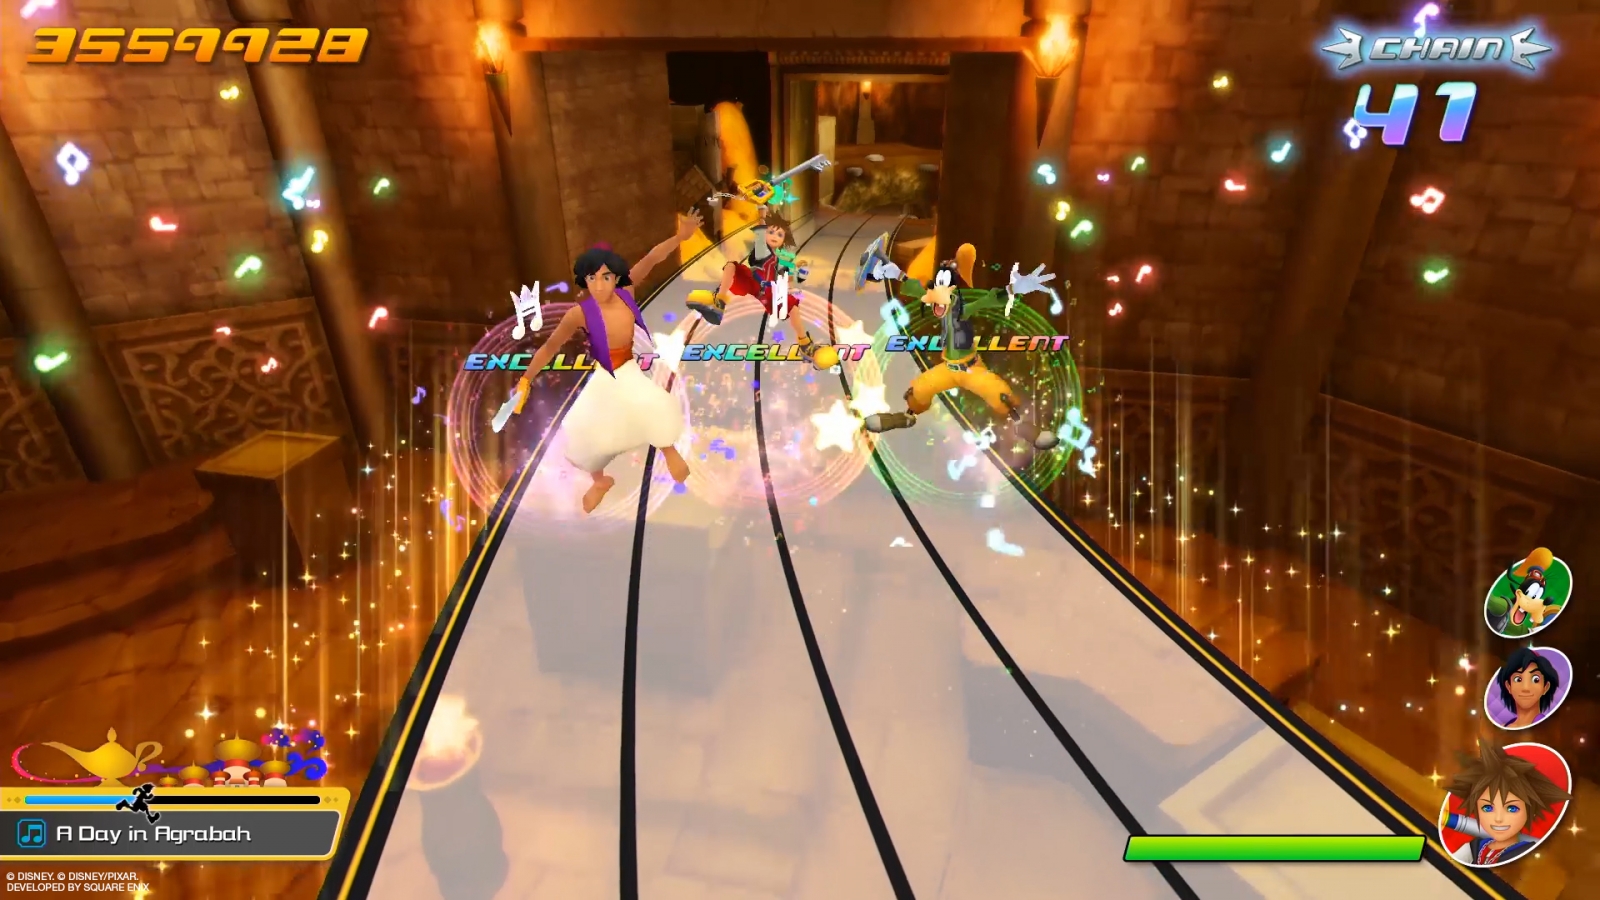 PS4 Kingdom Hearts: Melody of Memory